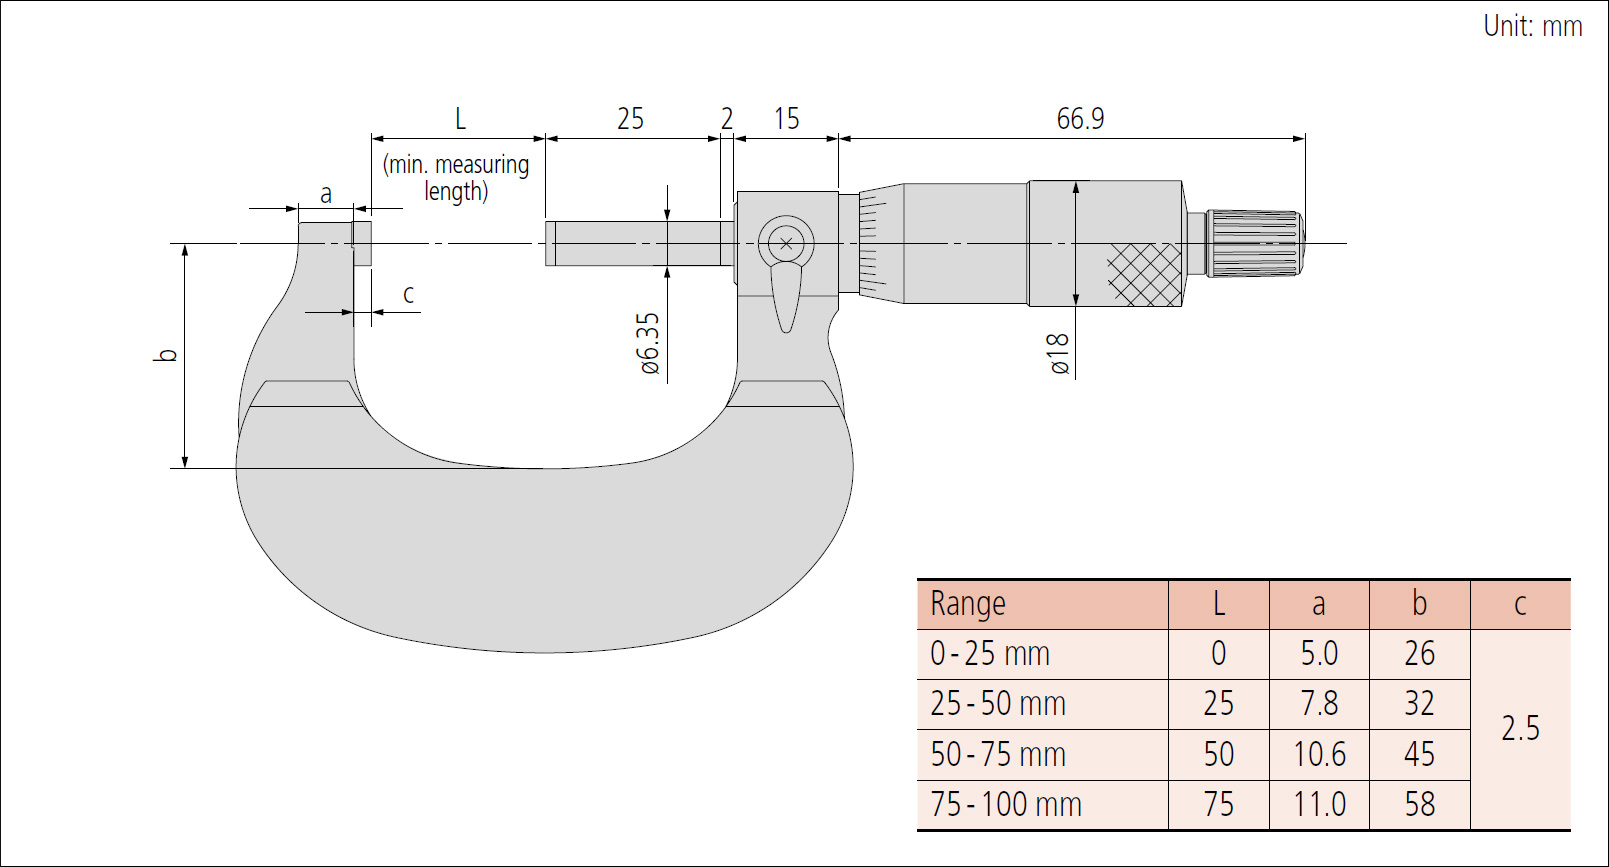 Mitutoyo economy micrometer dimensions,